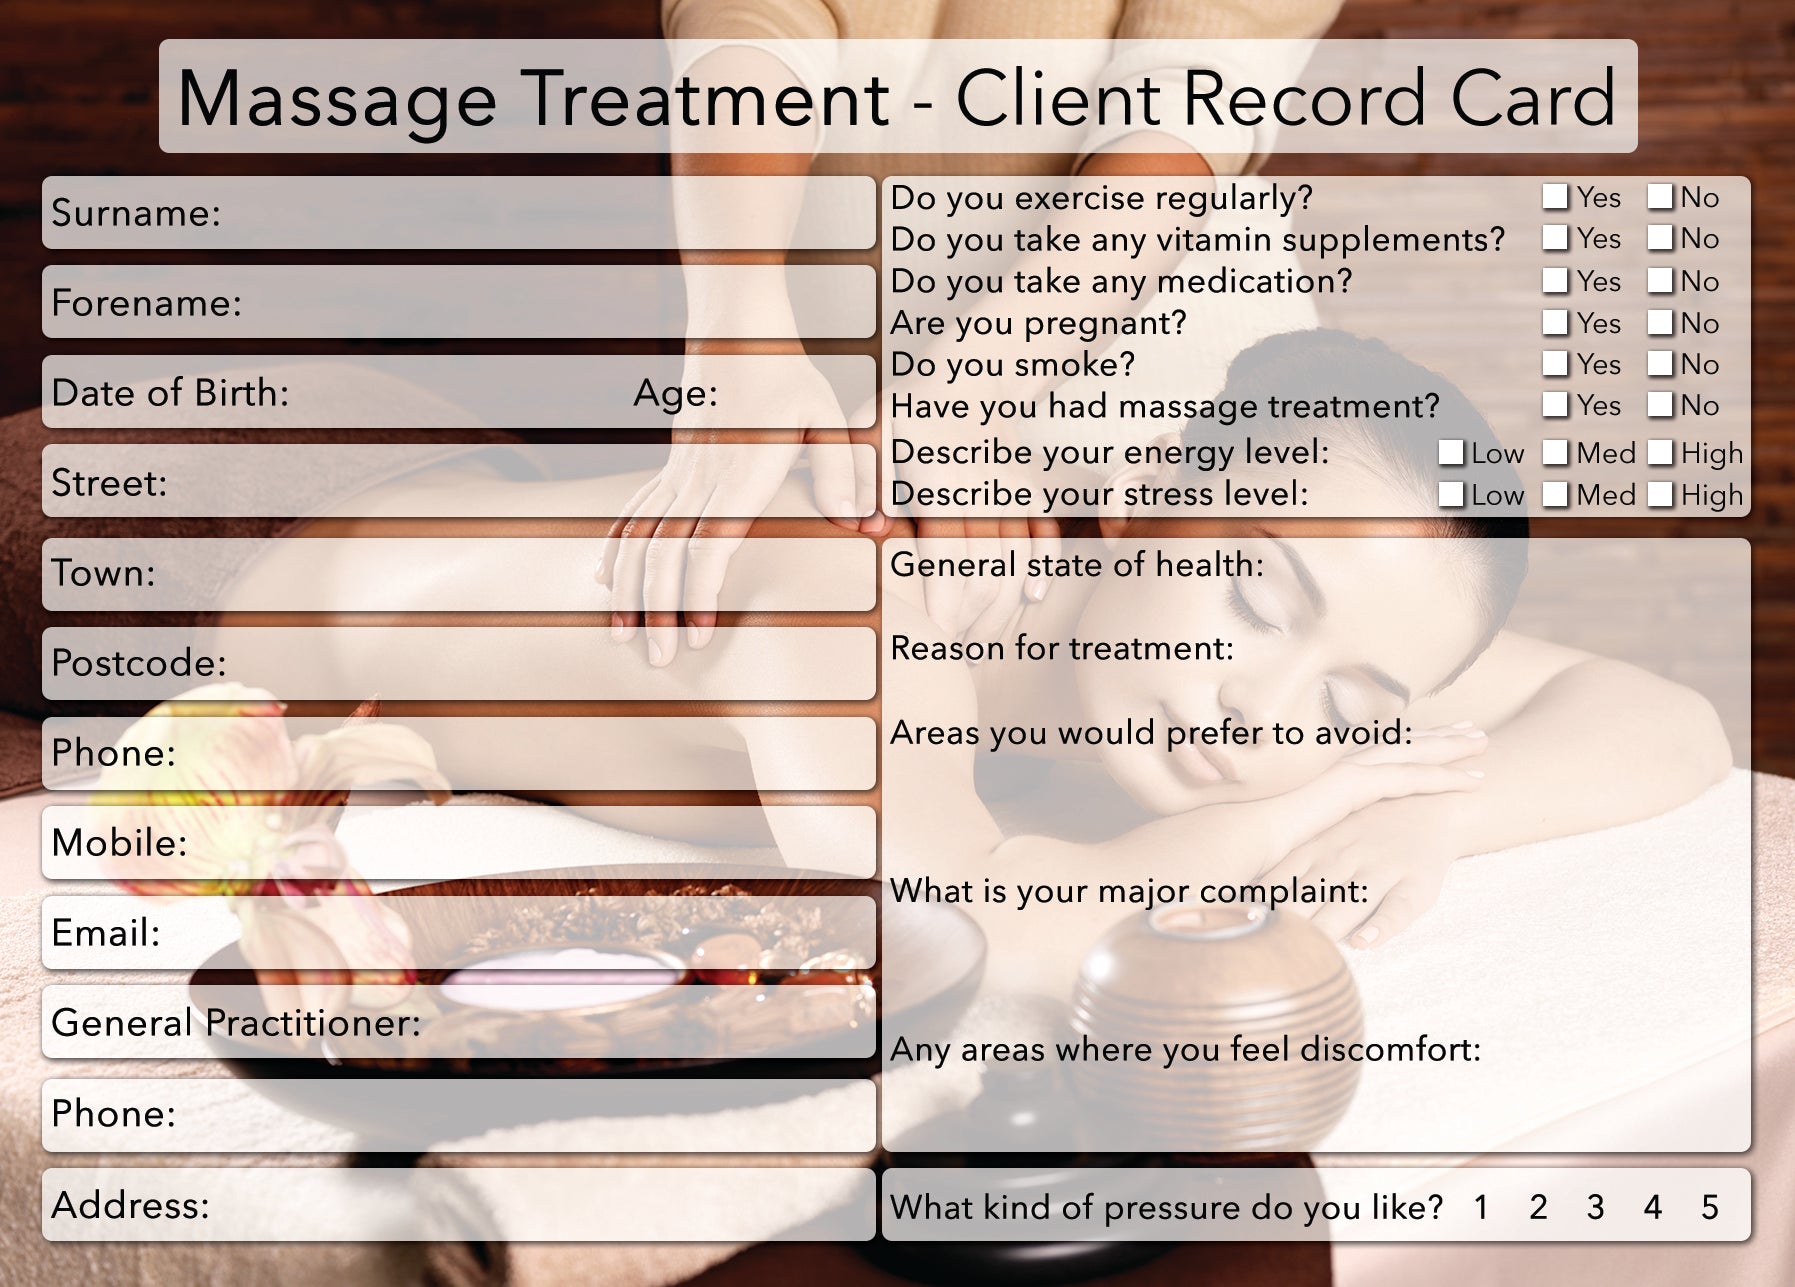 Client needs more than massage